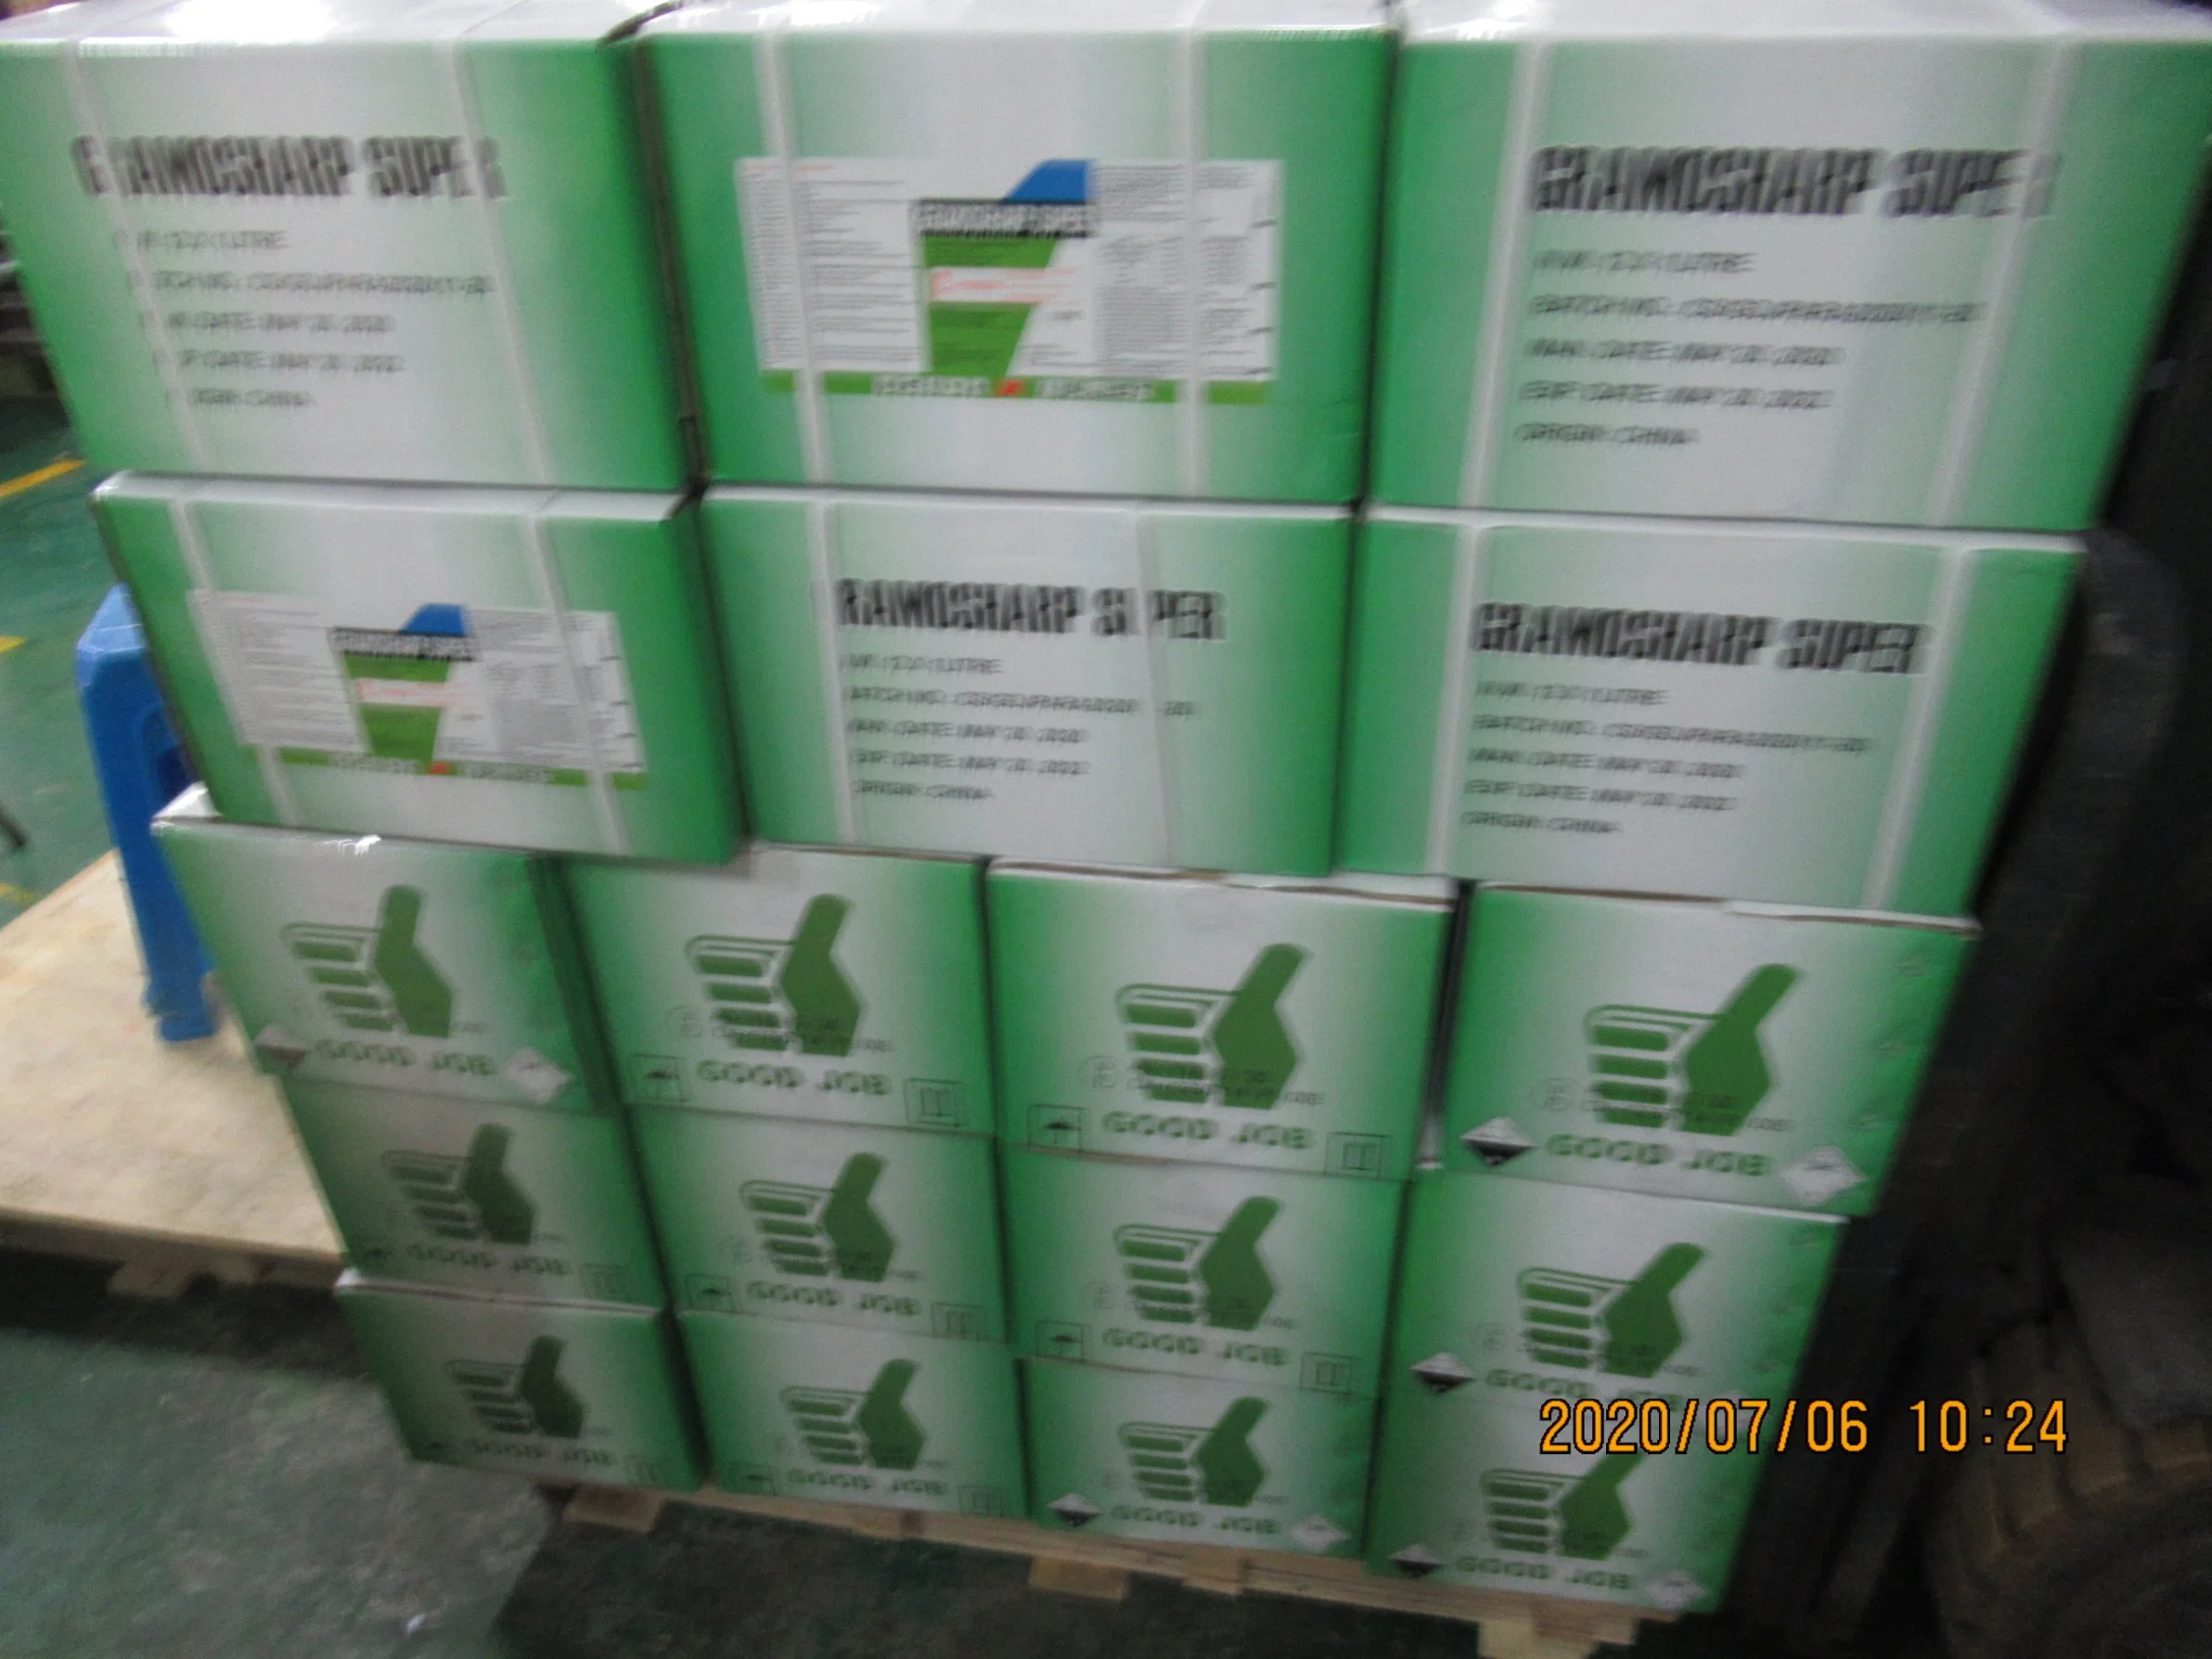 China factory manufacturer herbicide Paraquat (42%TK, 20%SL, 276g/l SL) Herbicide Gramecoop 20 SL